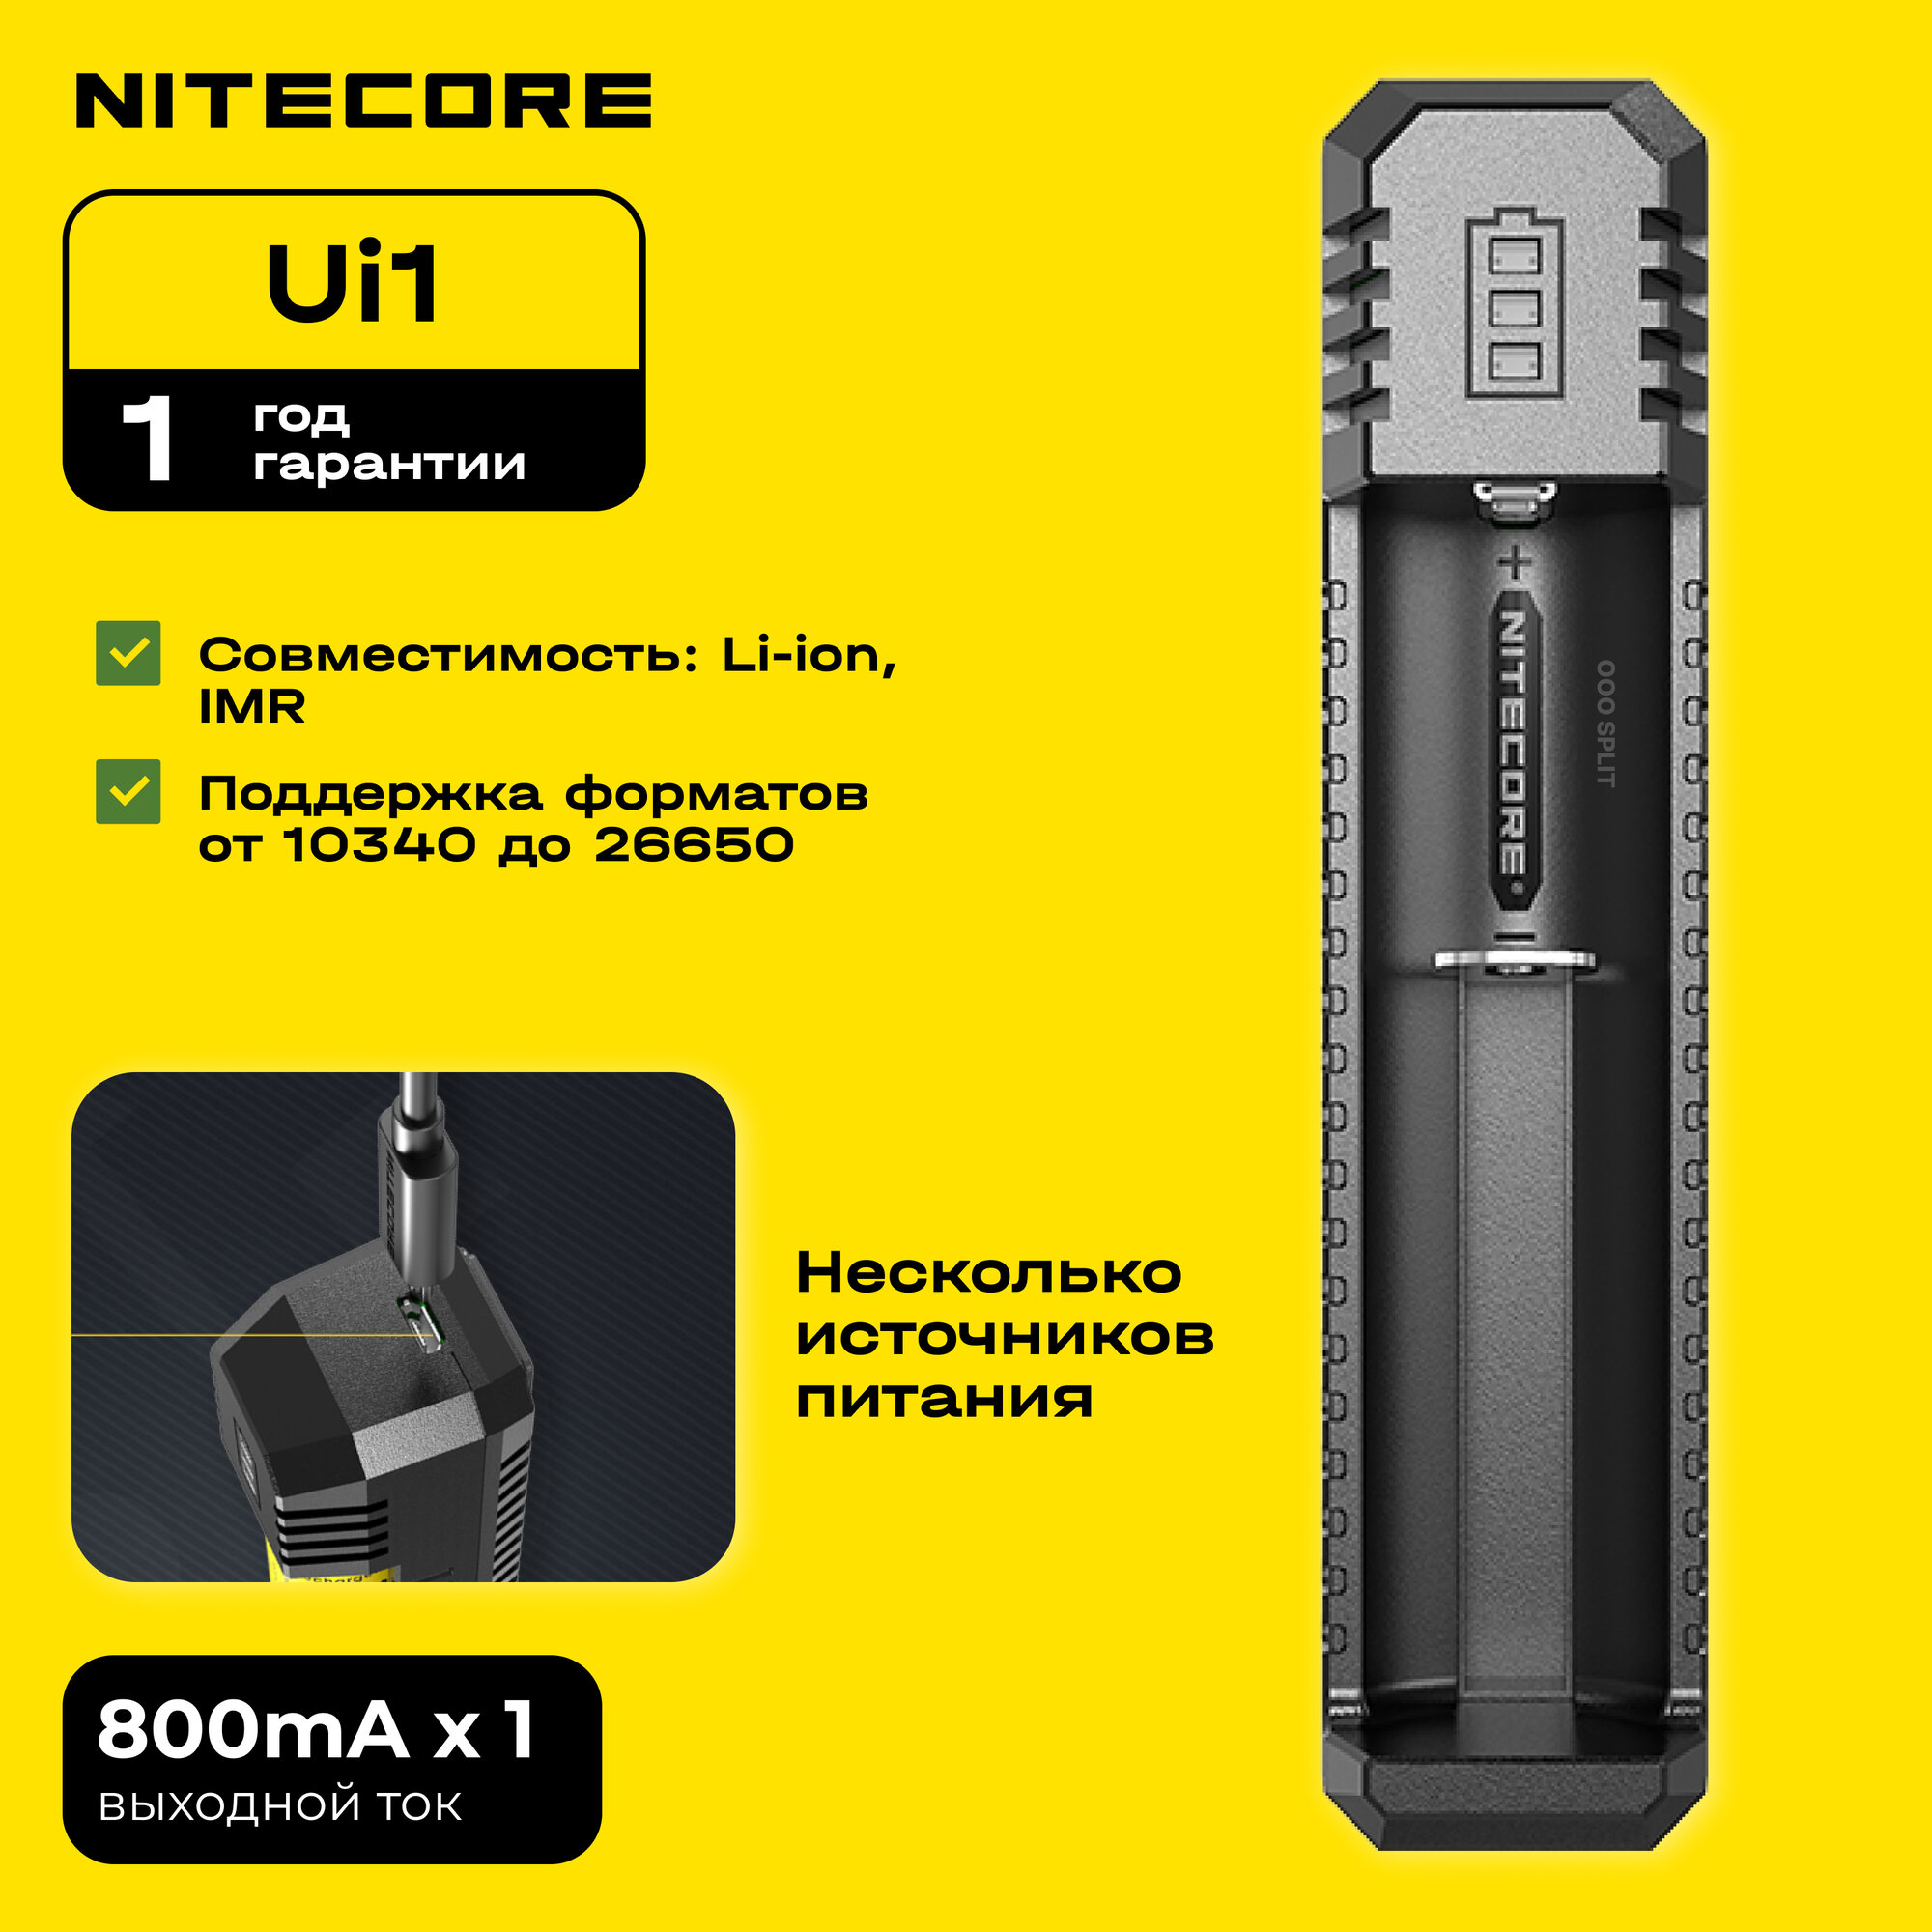 Nitecore Зарядные устройства UI1 18650/21700 на 1АКБ Intellicharge V2 Совместим с Li-ion и IMR аккумуляторами с автоматическим определением 18476